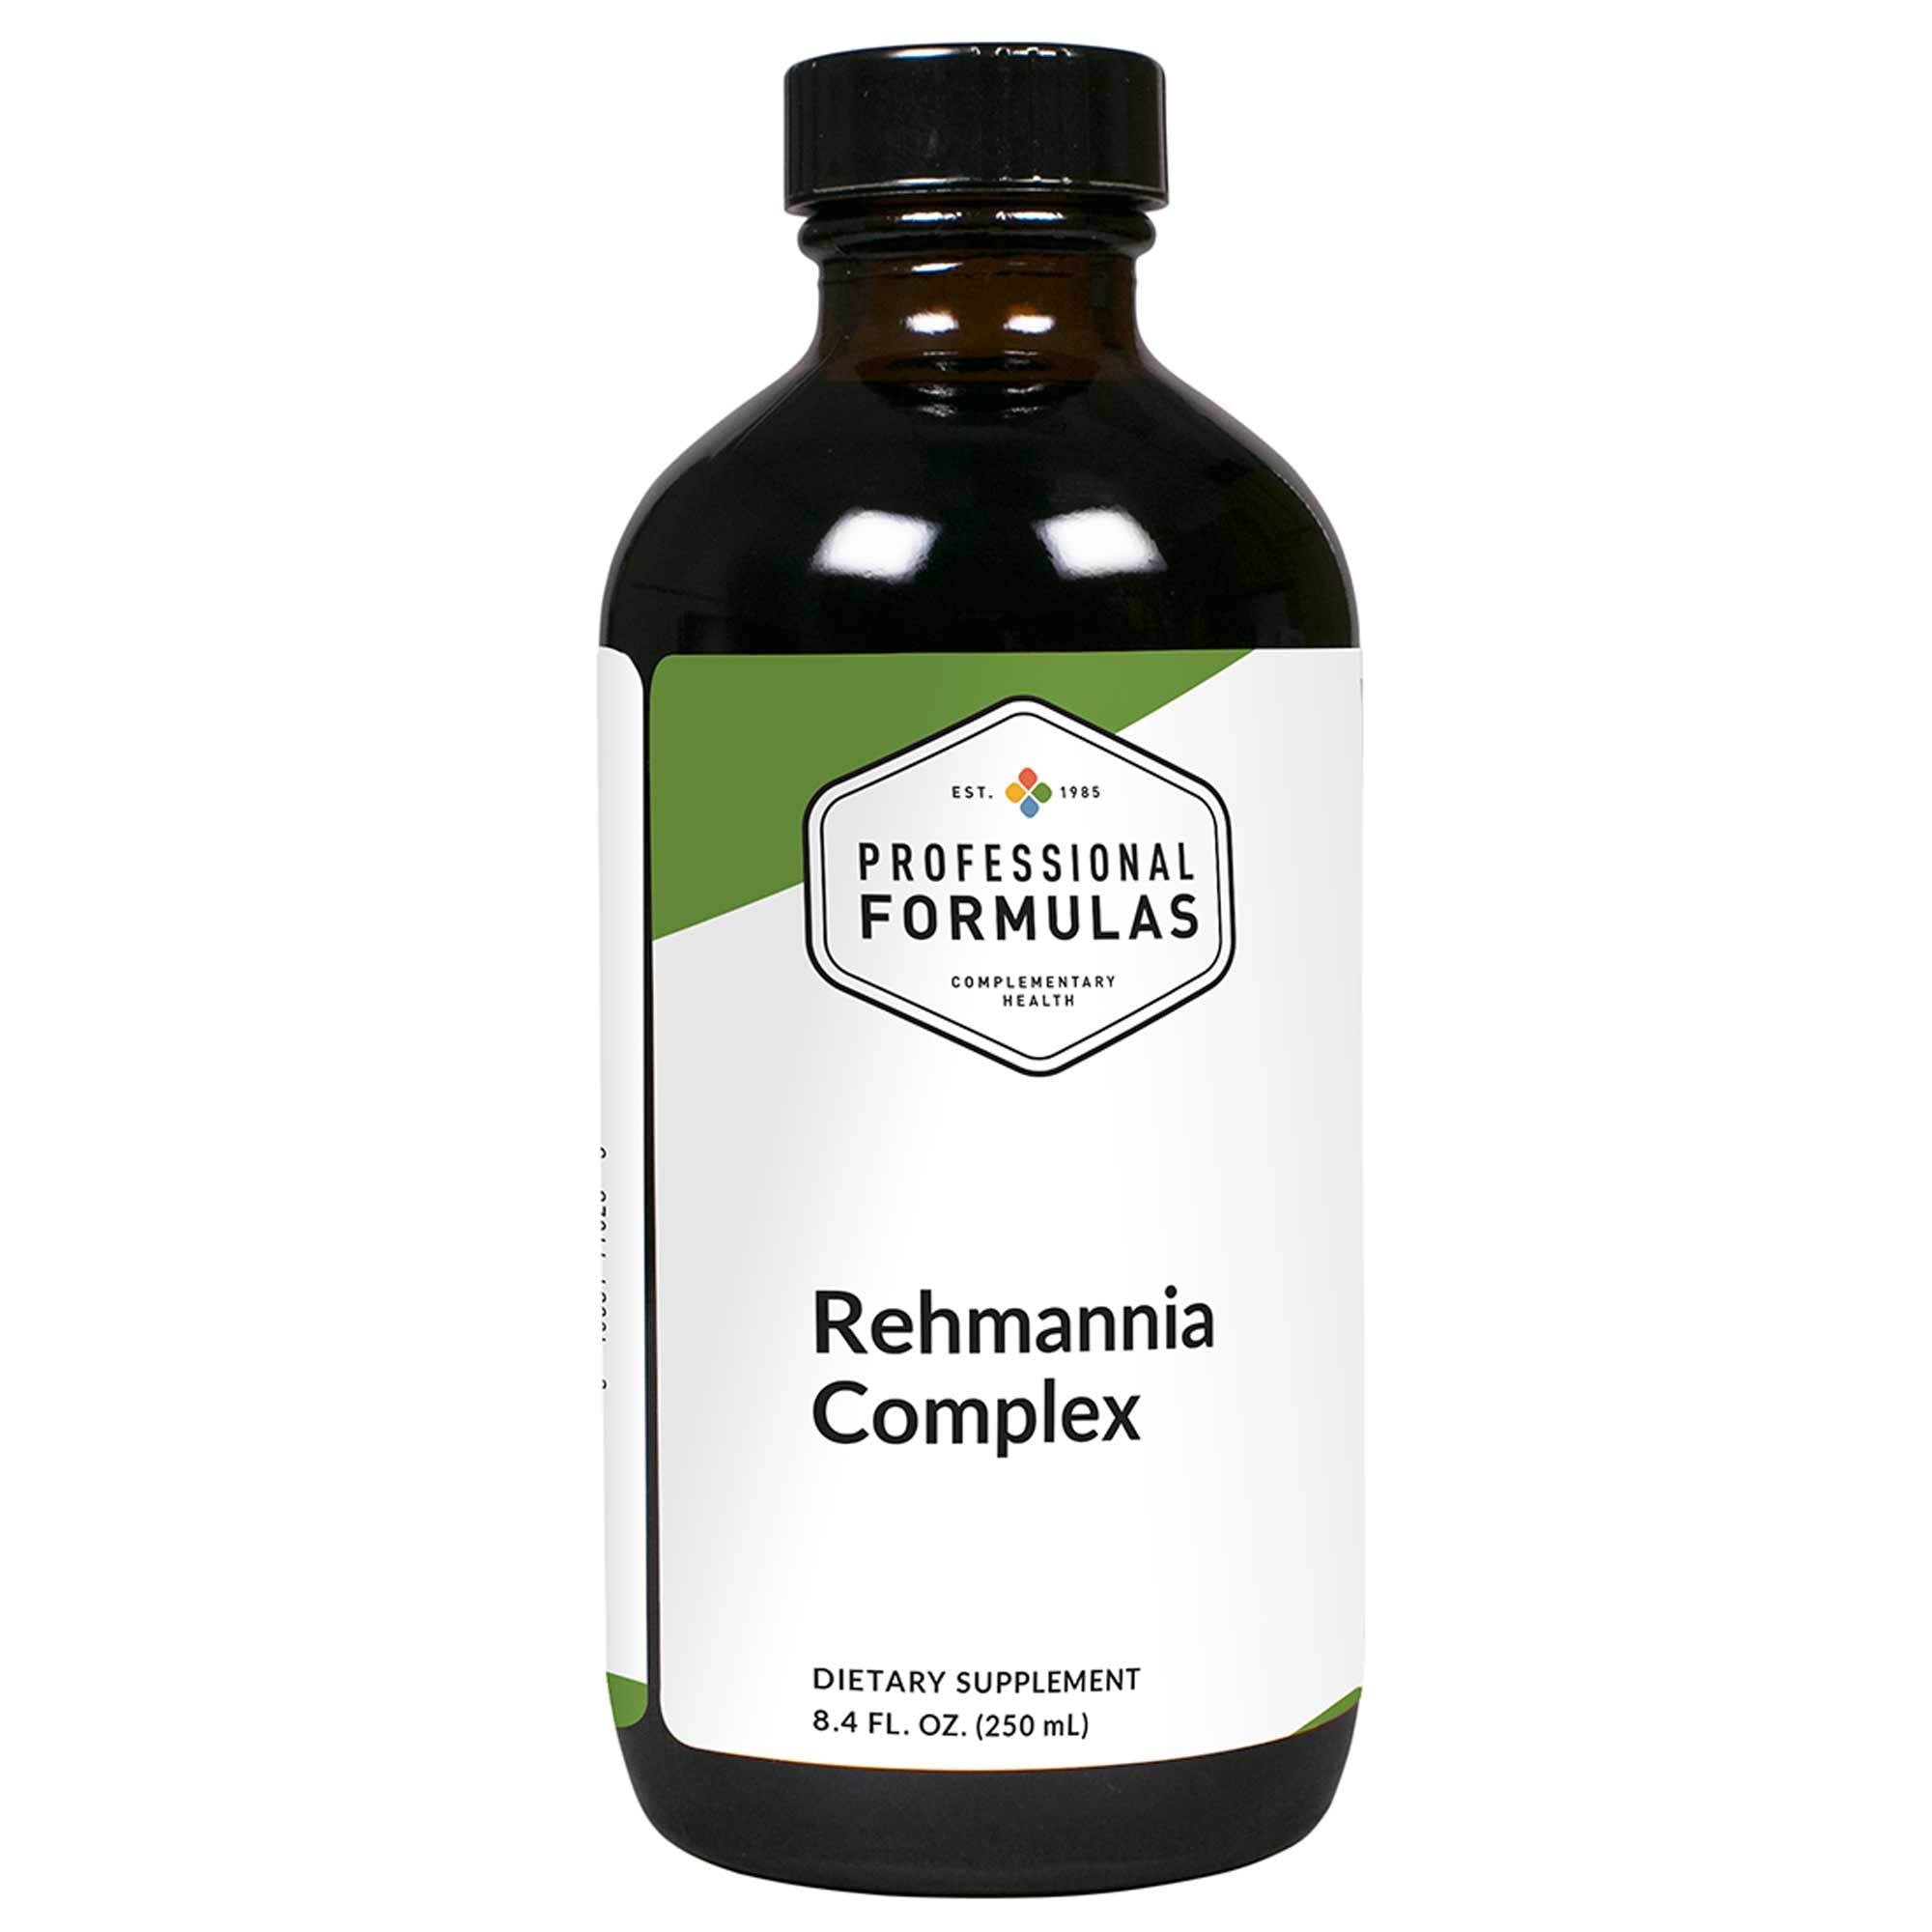 Professional Formulas - Rehmannia Complex - 8.4 FL. OZ. (250 mL)